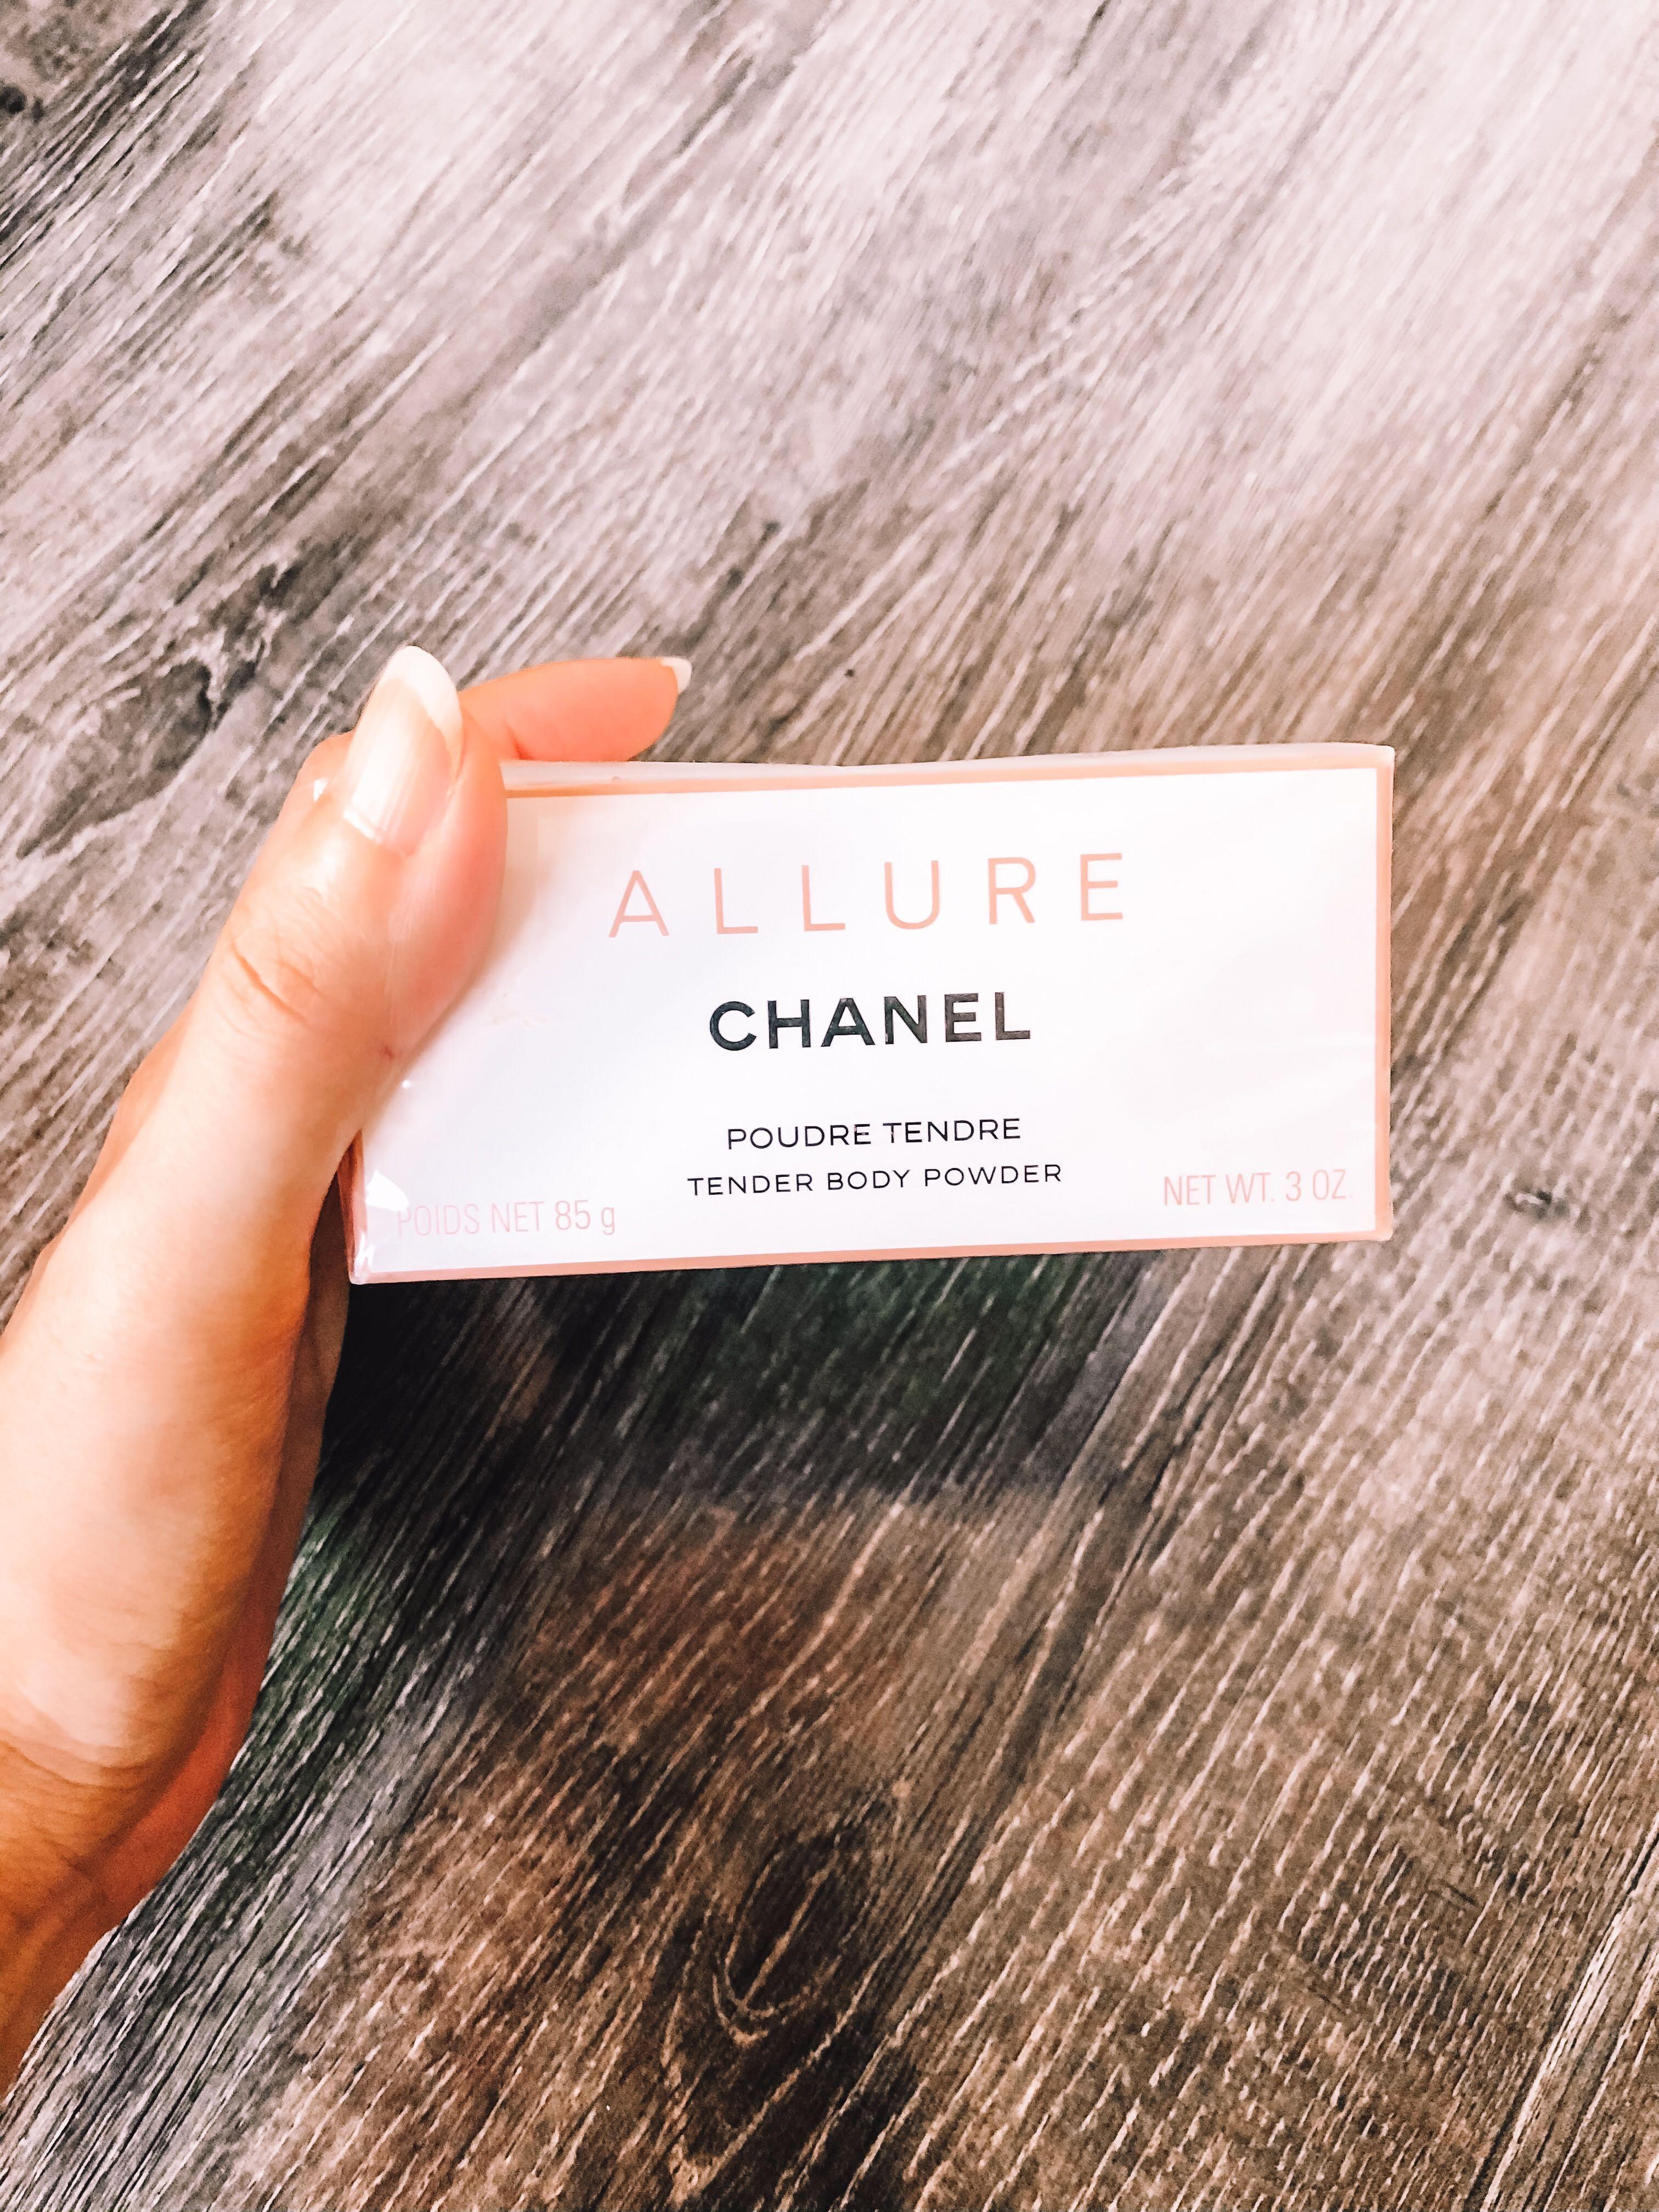 Allure Chanel Tender Body Powder